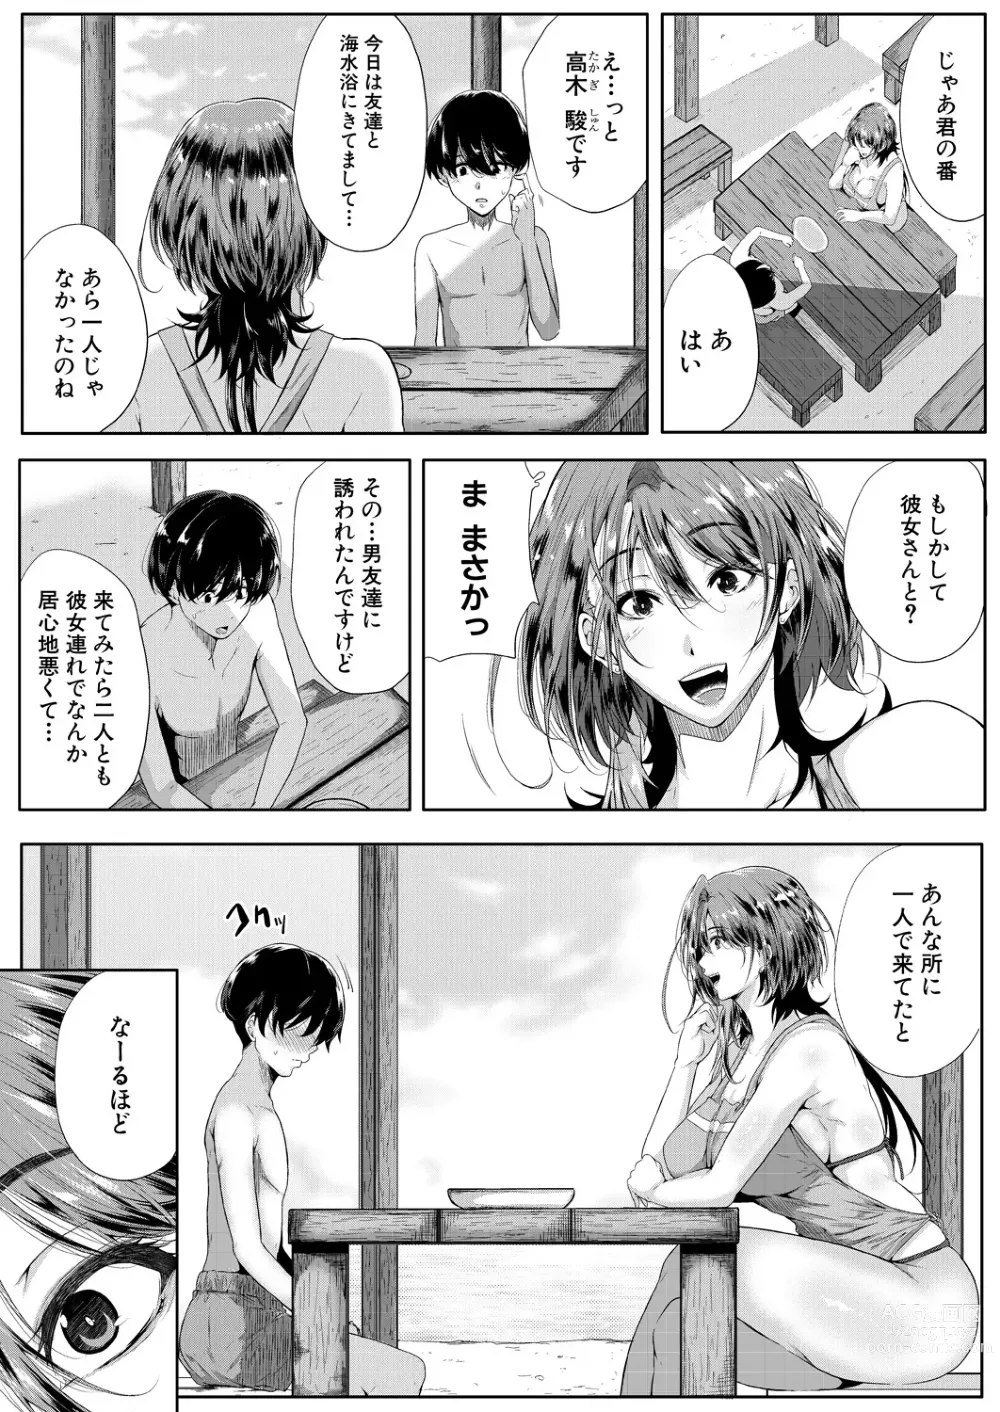 Page 8 of manga Strawberry Mermaid Ch.1-2